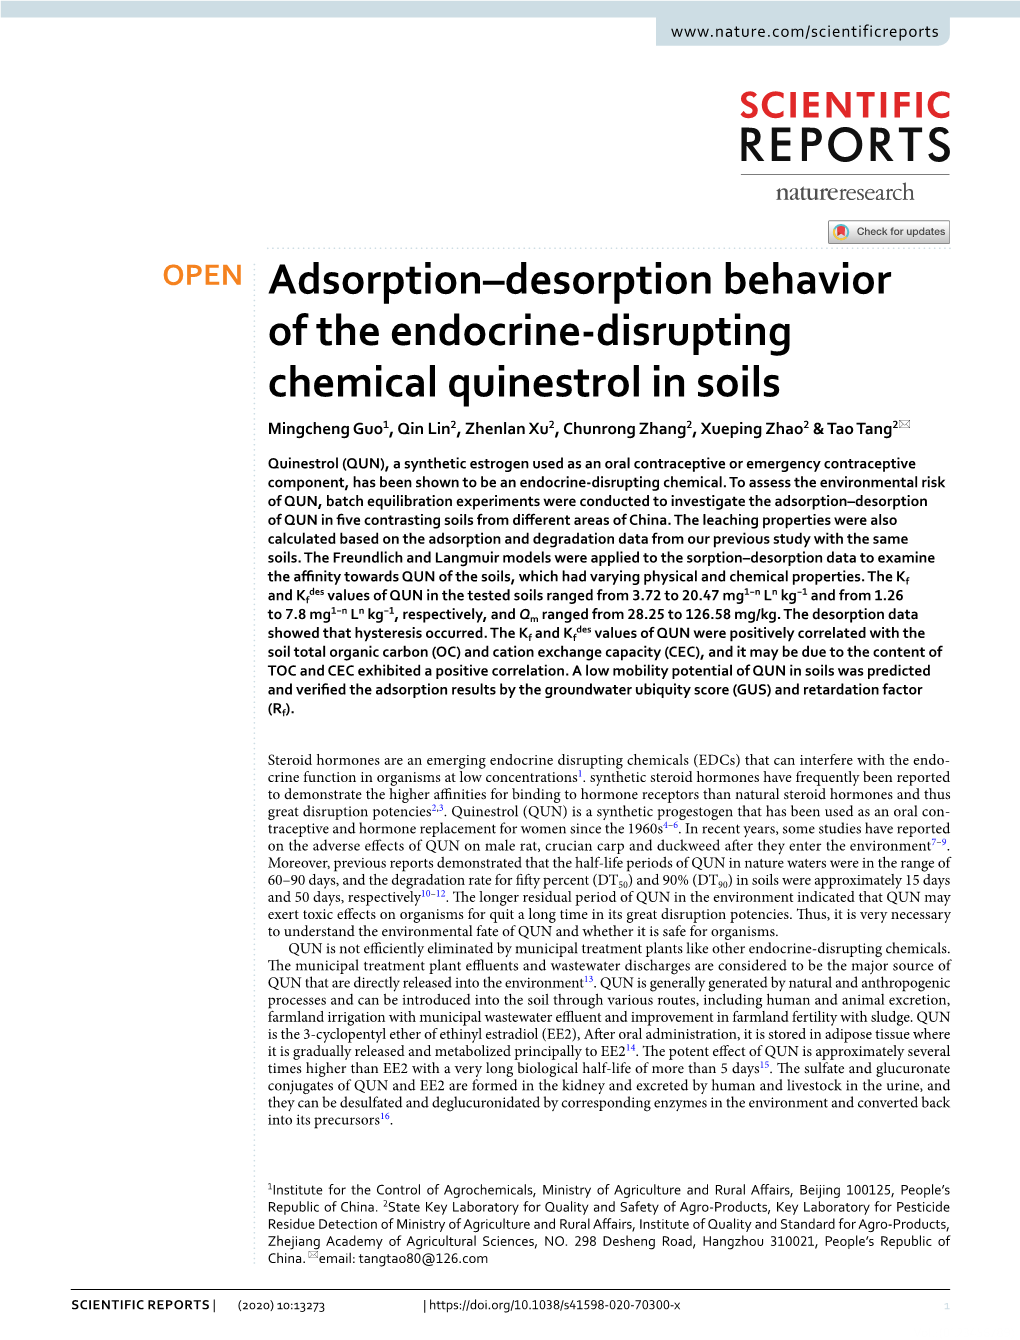 Adsorption–Desorption Behavior of the Endocrine-Disrupting Chemical